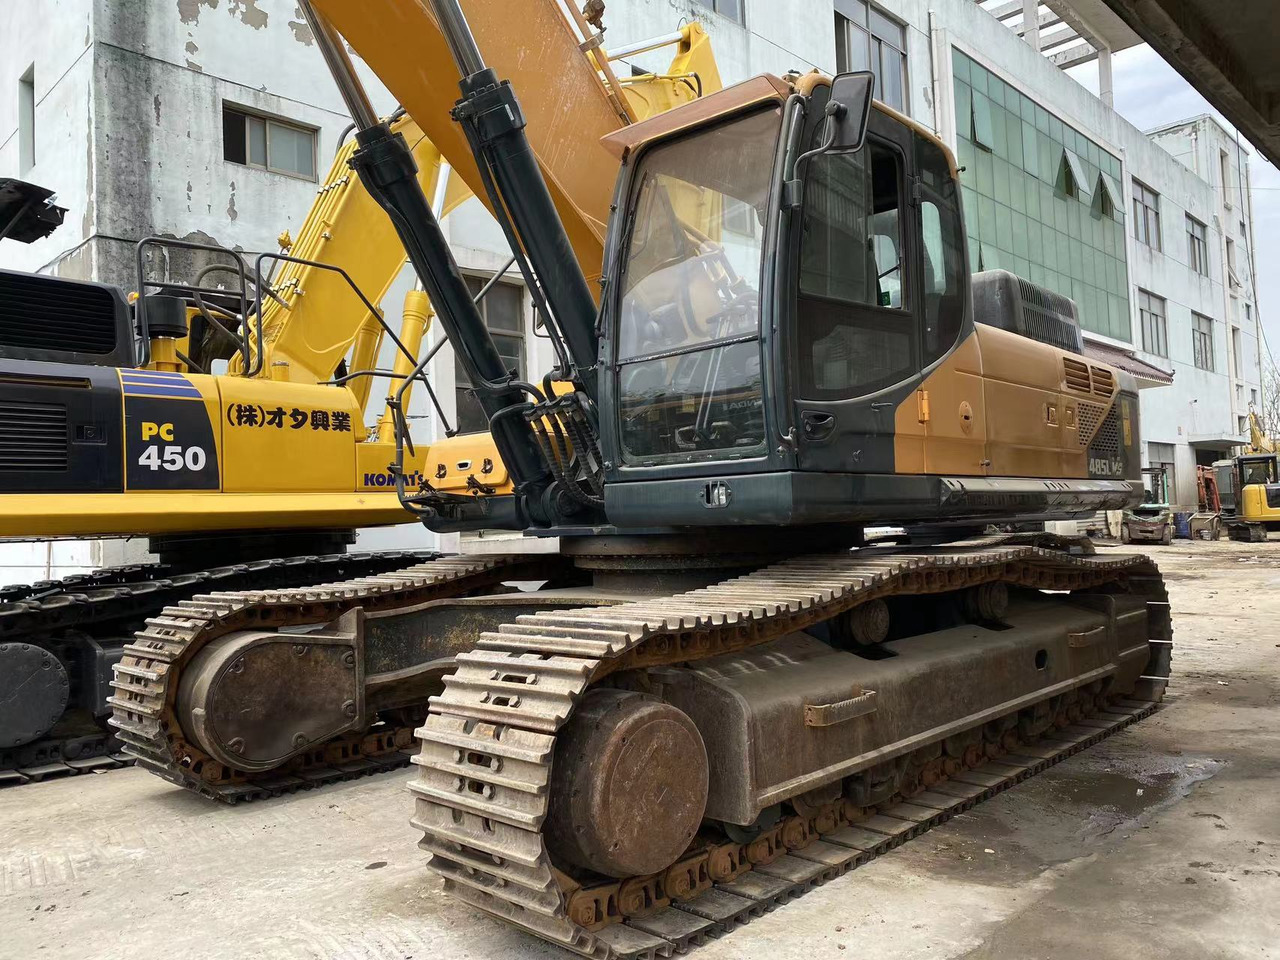 Гусеничный экскаватор Korea made HYUNDAI used excavator good condition R485LVS best service on sale: фото 4